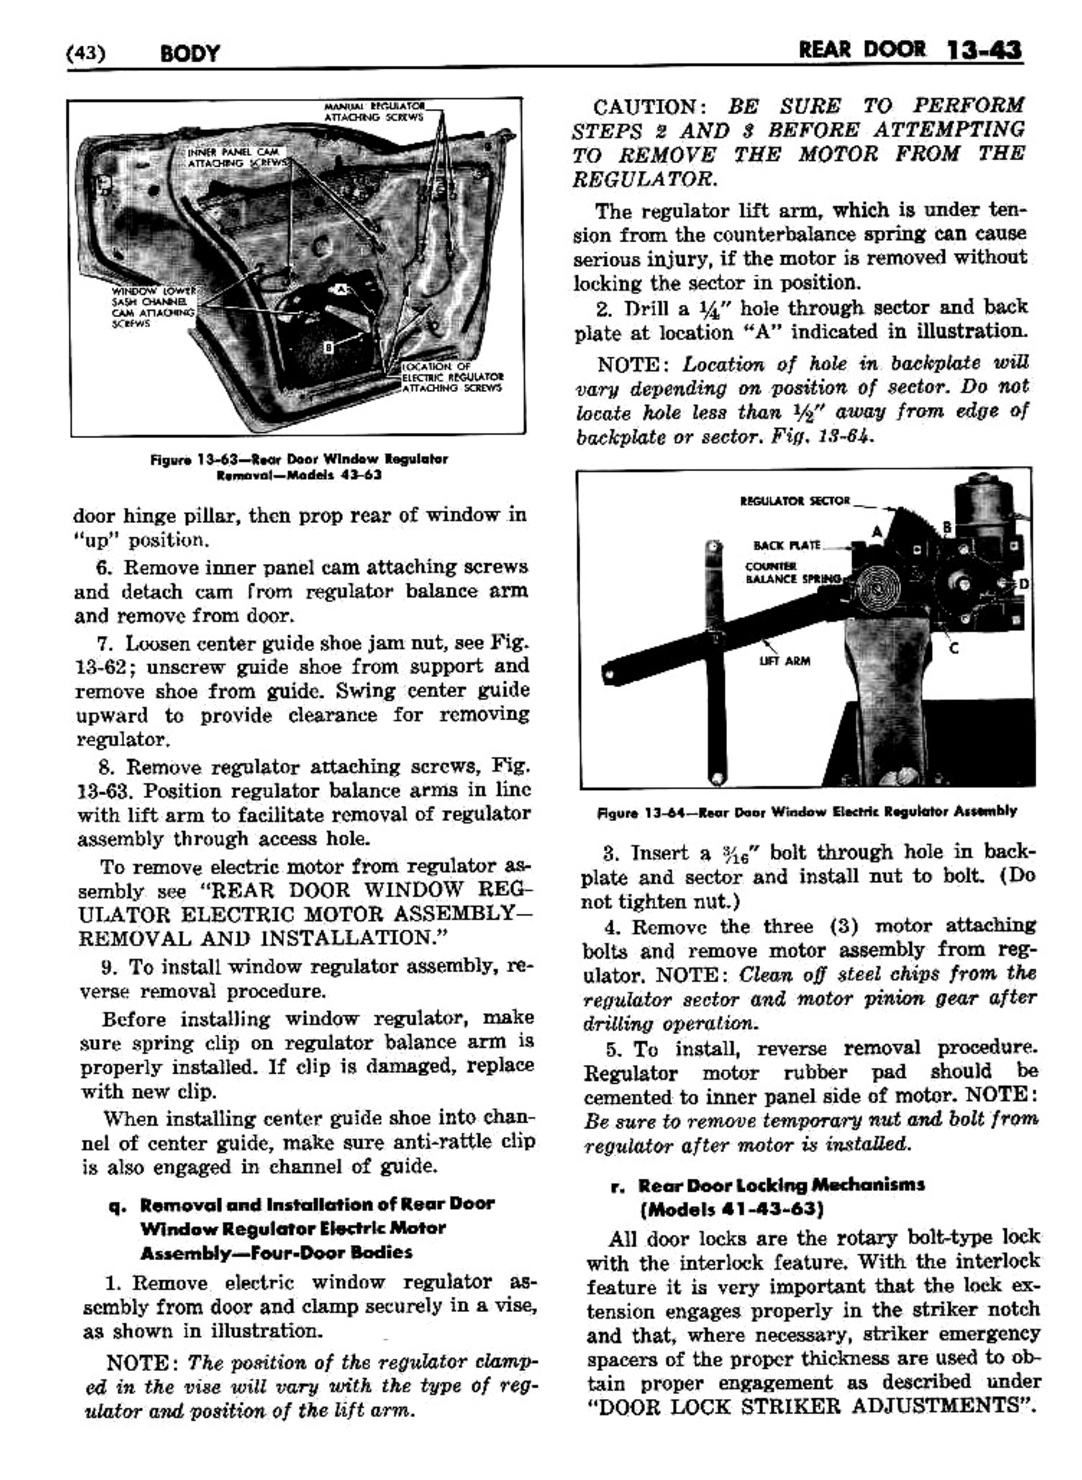 n_1957 Buick Body Service Manual-045-045.jpg